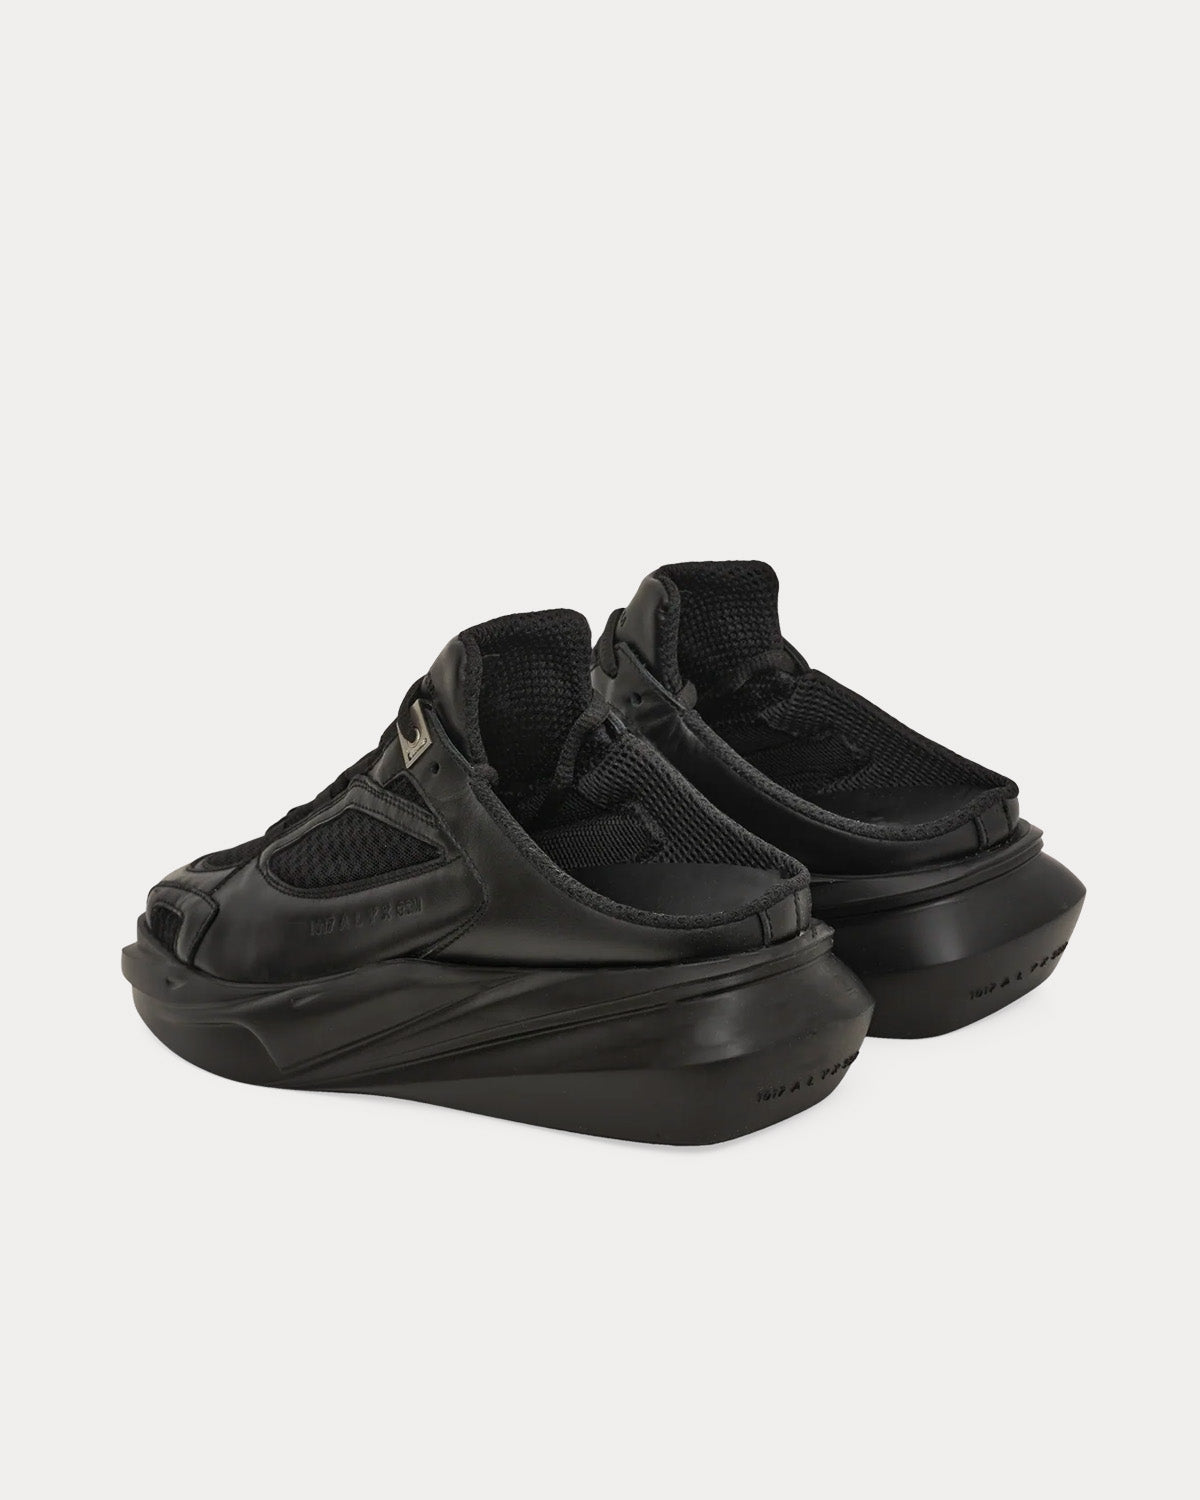 1017 ALYX 9SM - Mono Hiking Mule Black Low Top Sneakers